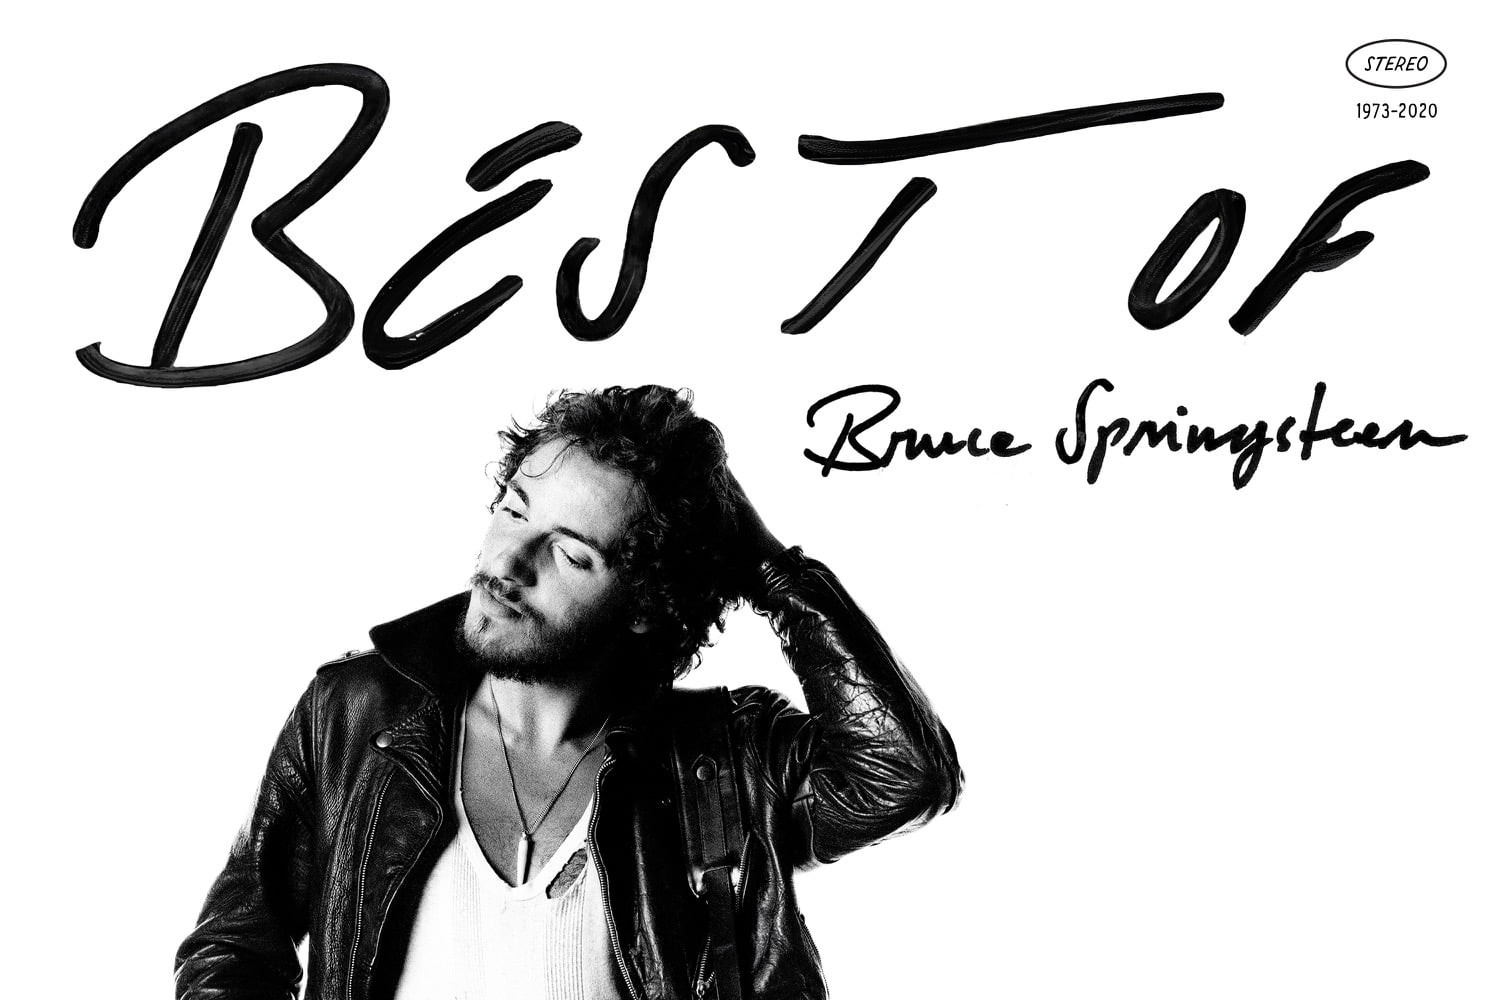 Bruce Springsteen “Best Of”